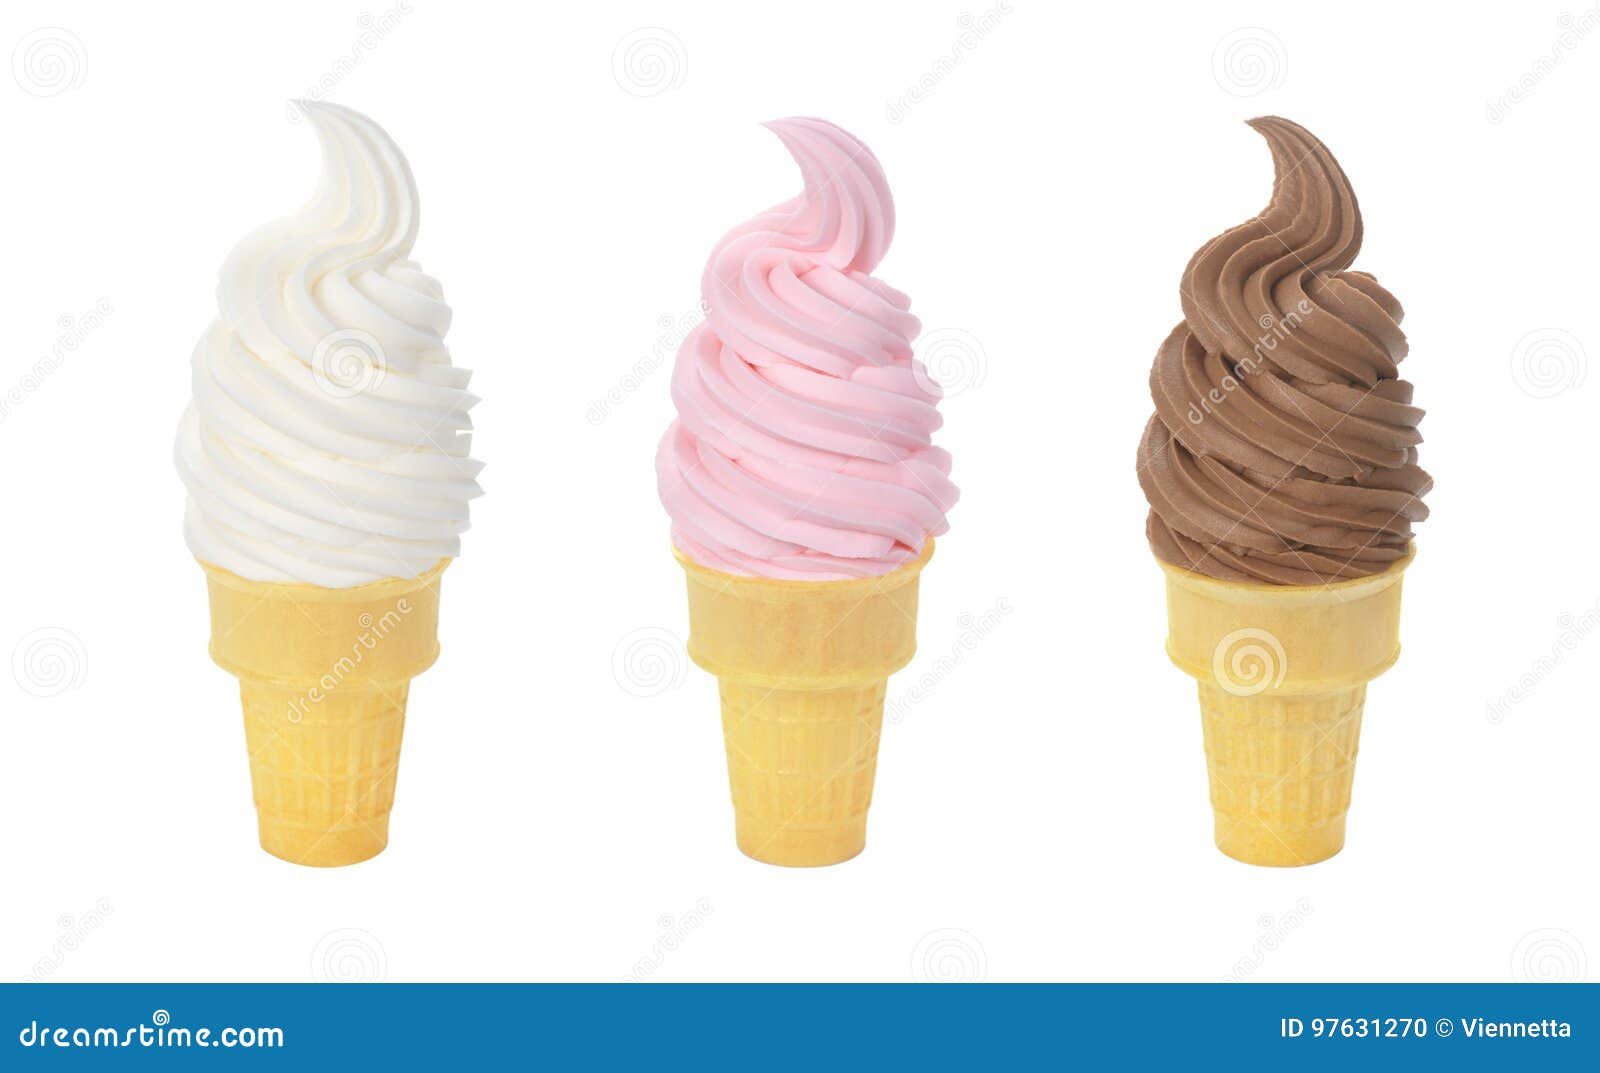 frozen yogurt or soft serve ice cream cones